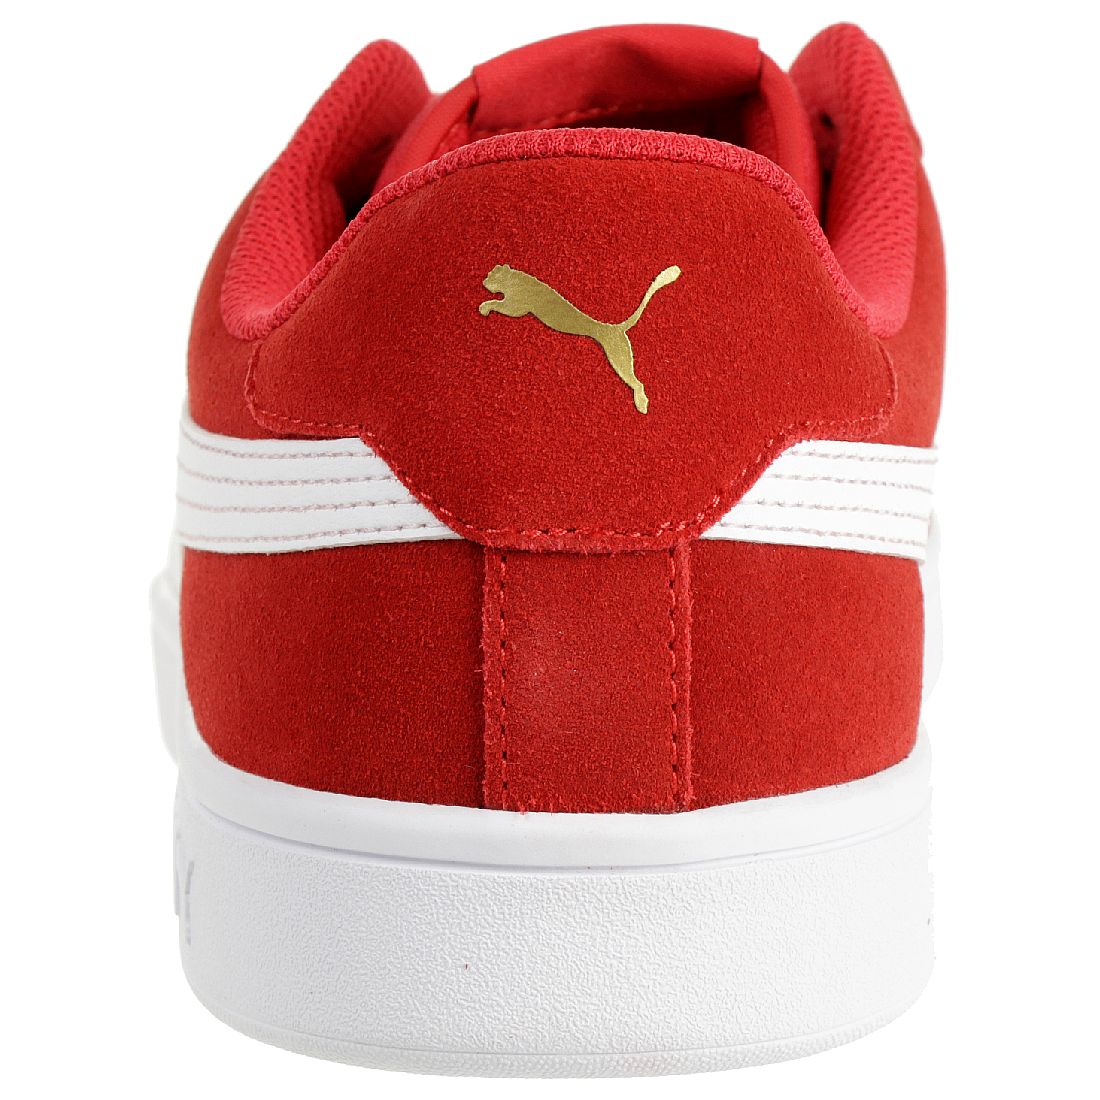 Puma Smash v2 Unisex Sneaker Schuh Rot 364989 22